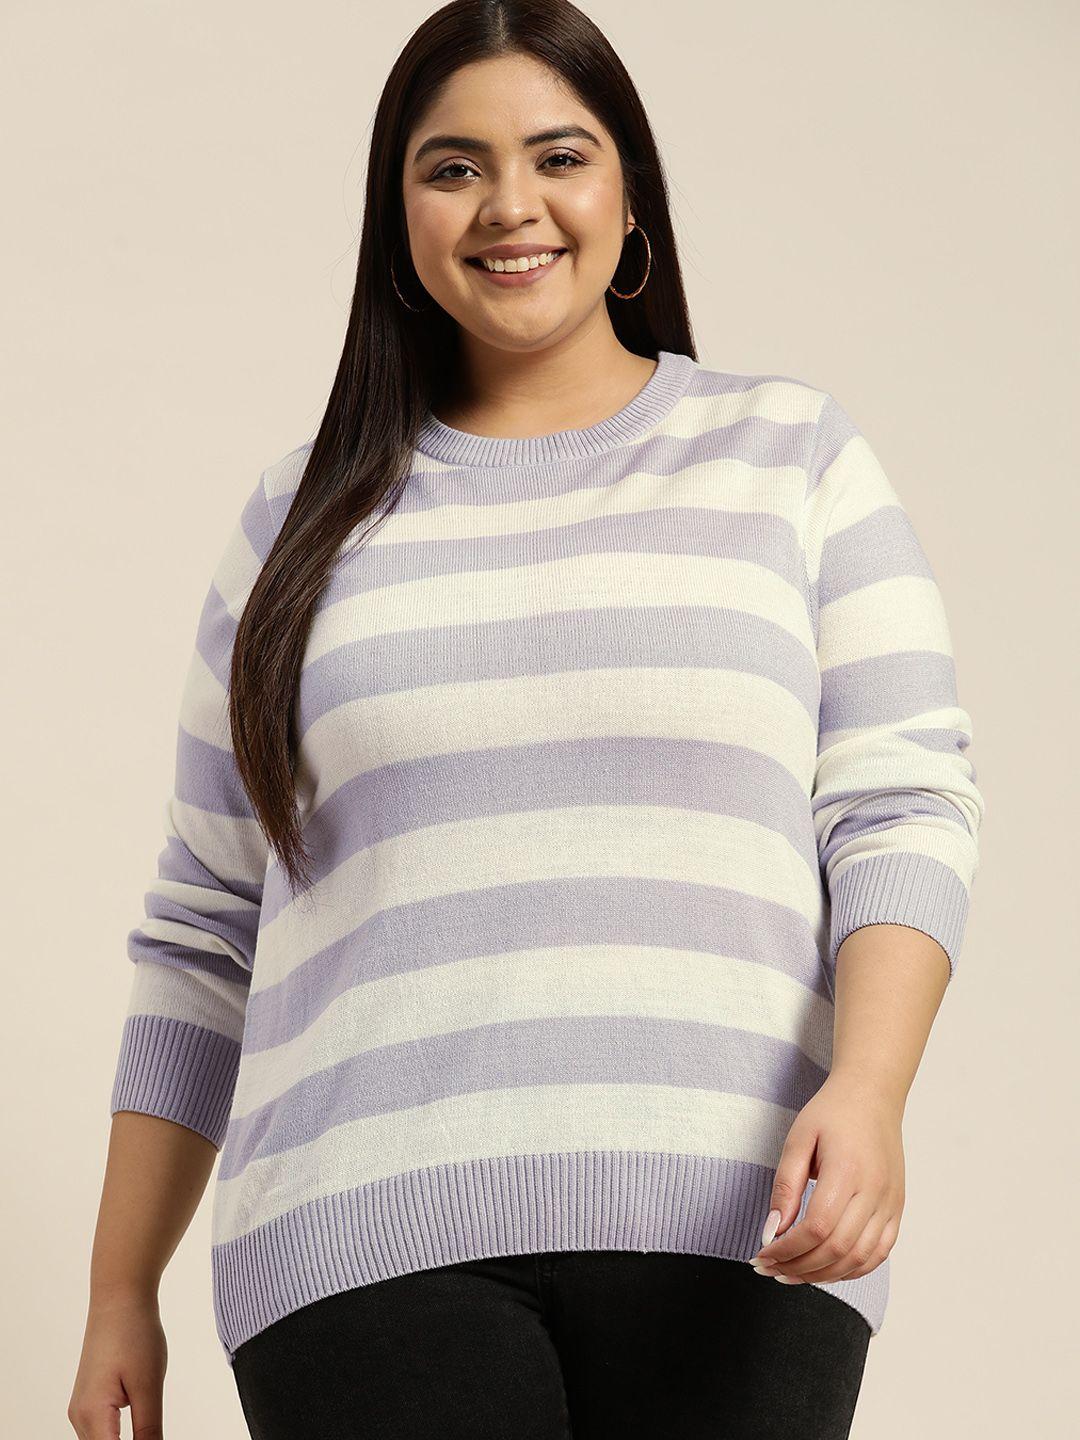 sztori women plus size white & lavender striped striped sweater